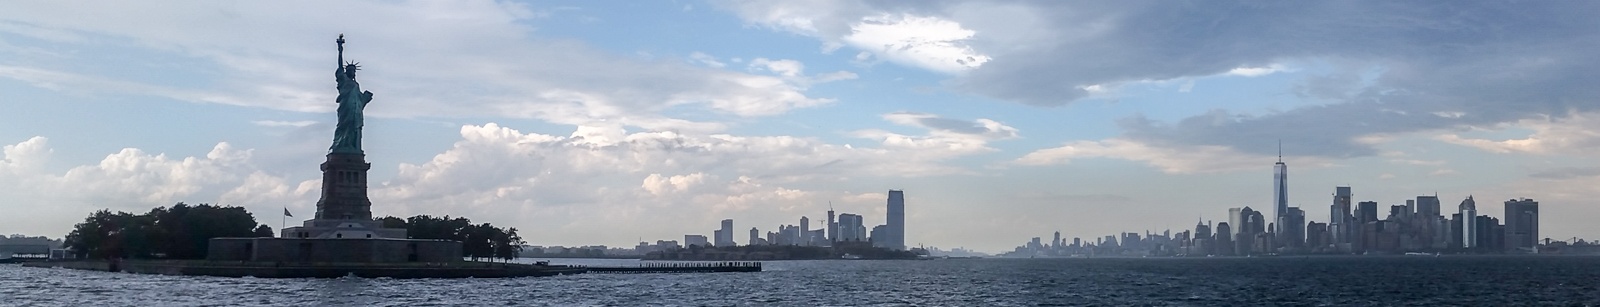 NYC2015- panorama